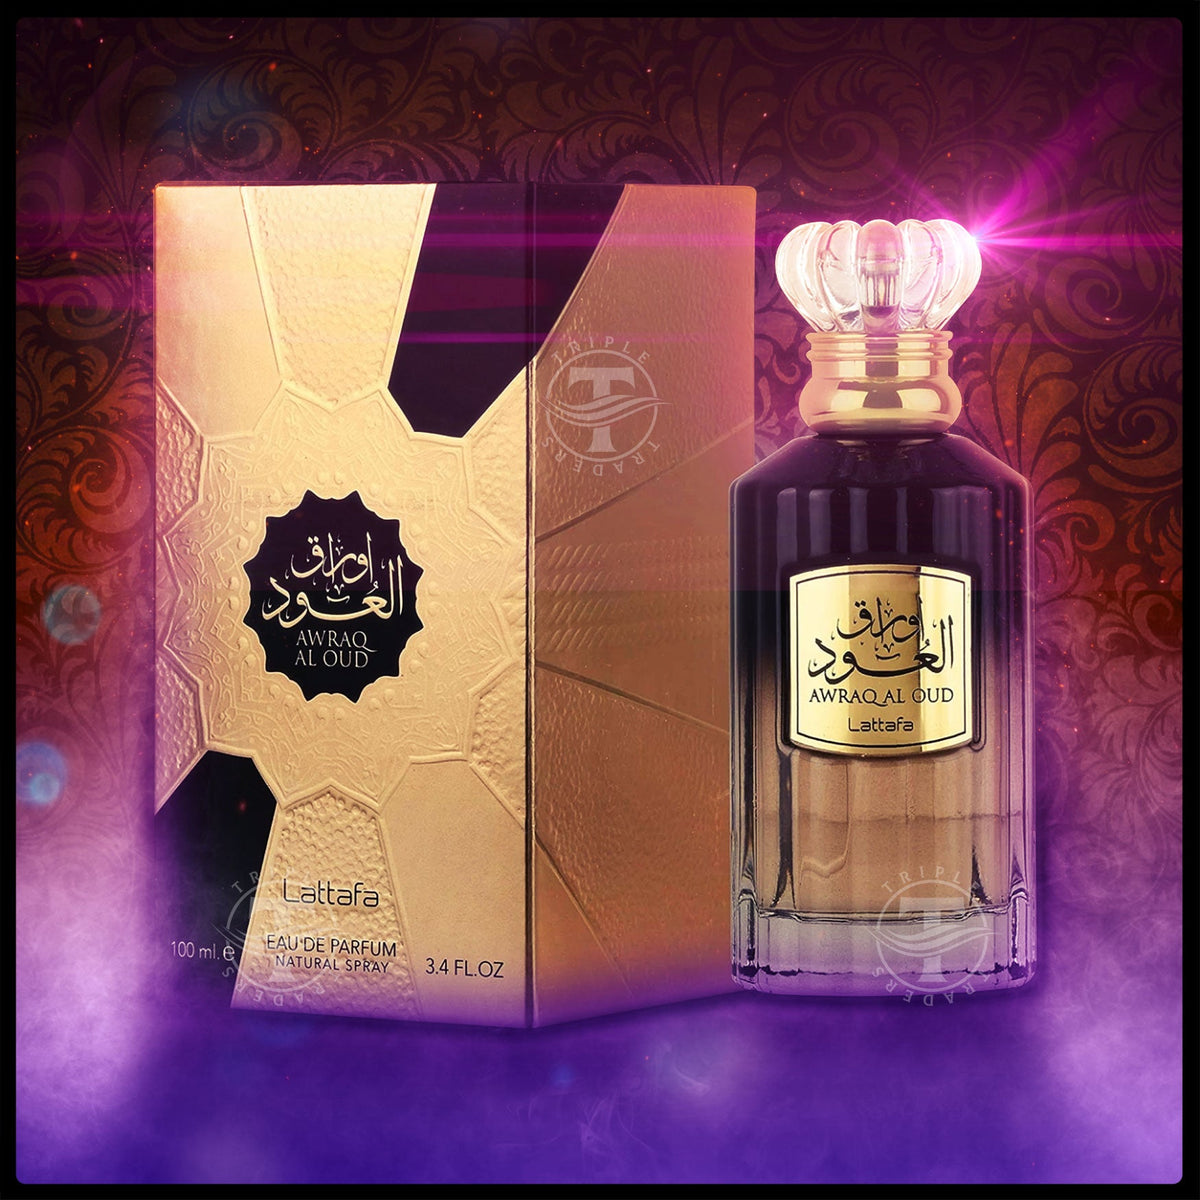 Lattafa Awraq Al Oud Eau de Parfum 3.4 oz